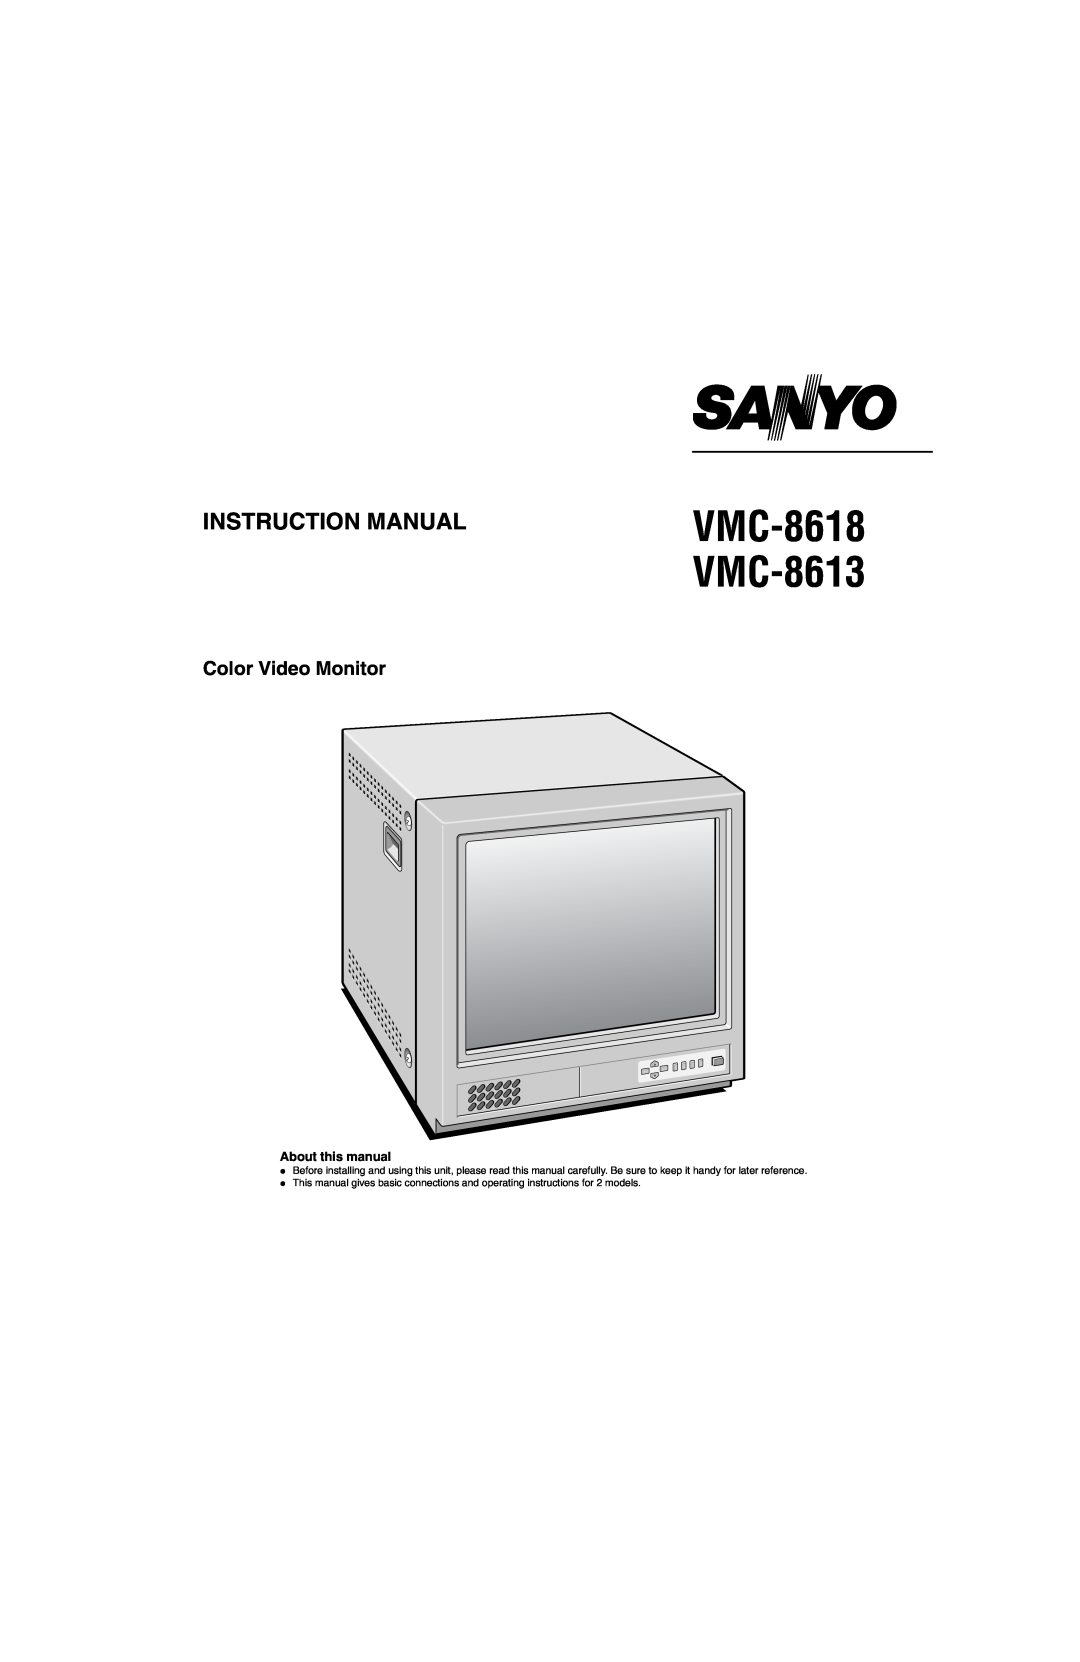 Sanyo instruction manual About this manual, VMC-8618 VMC-8613, Instruction Manual, Color Video Monitor 